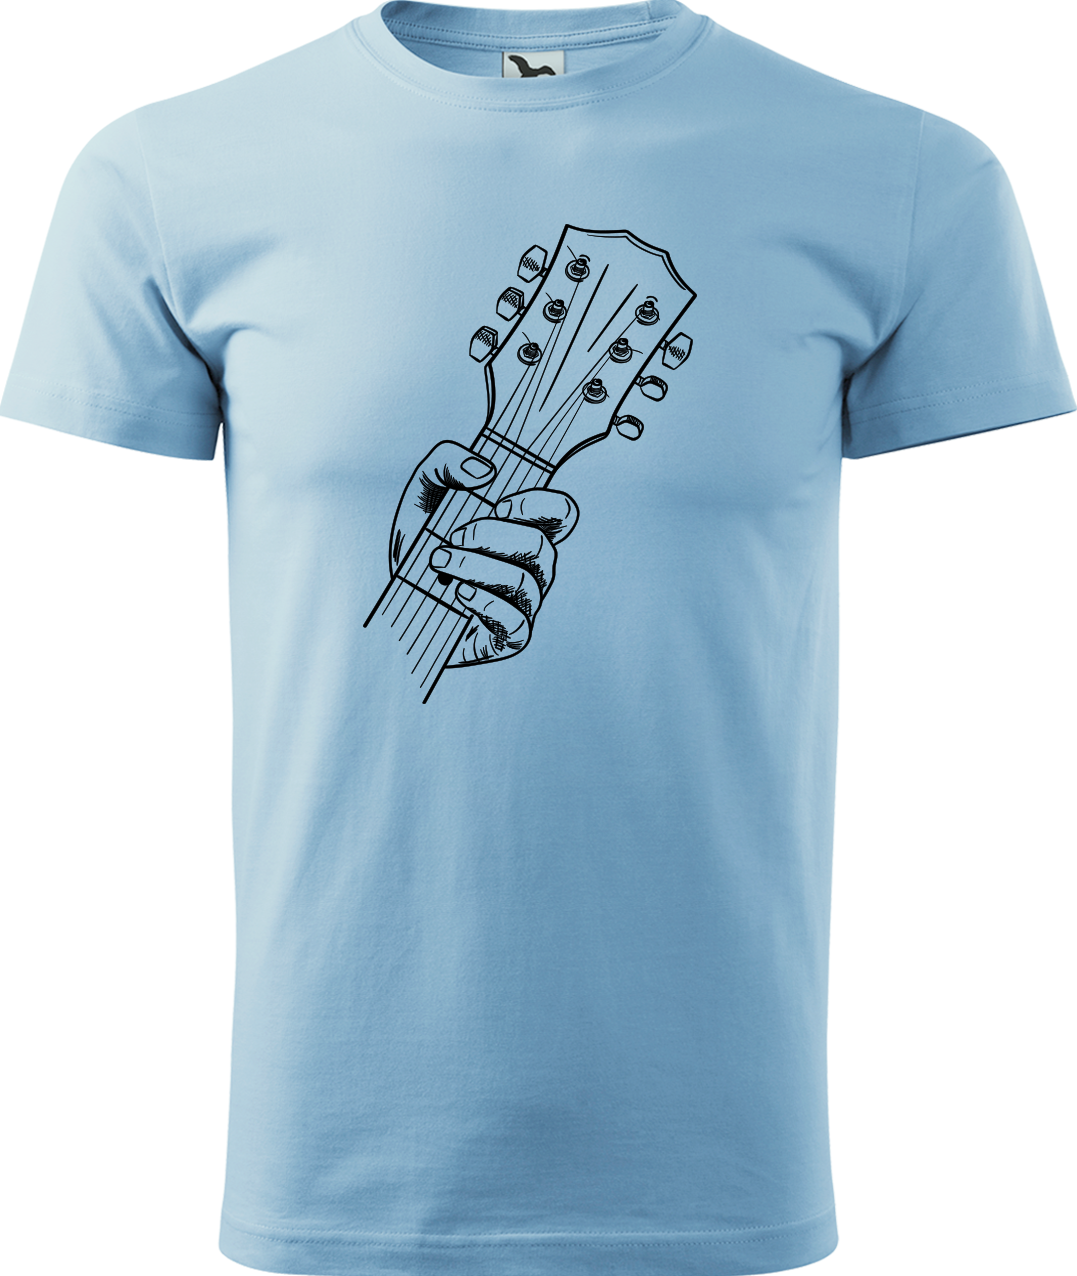 Pánské tričko s kytarou - Hlava kytary Velikost: 4XL, Barva: Nebesky modrá (15)